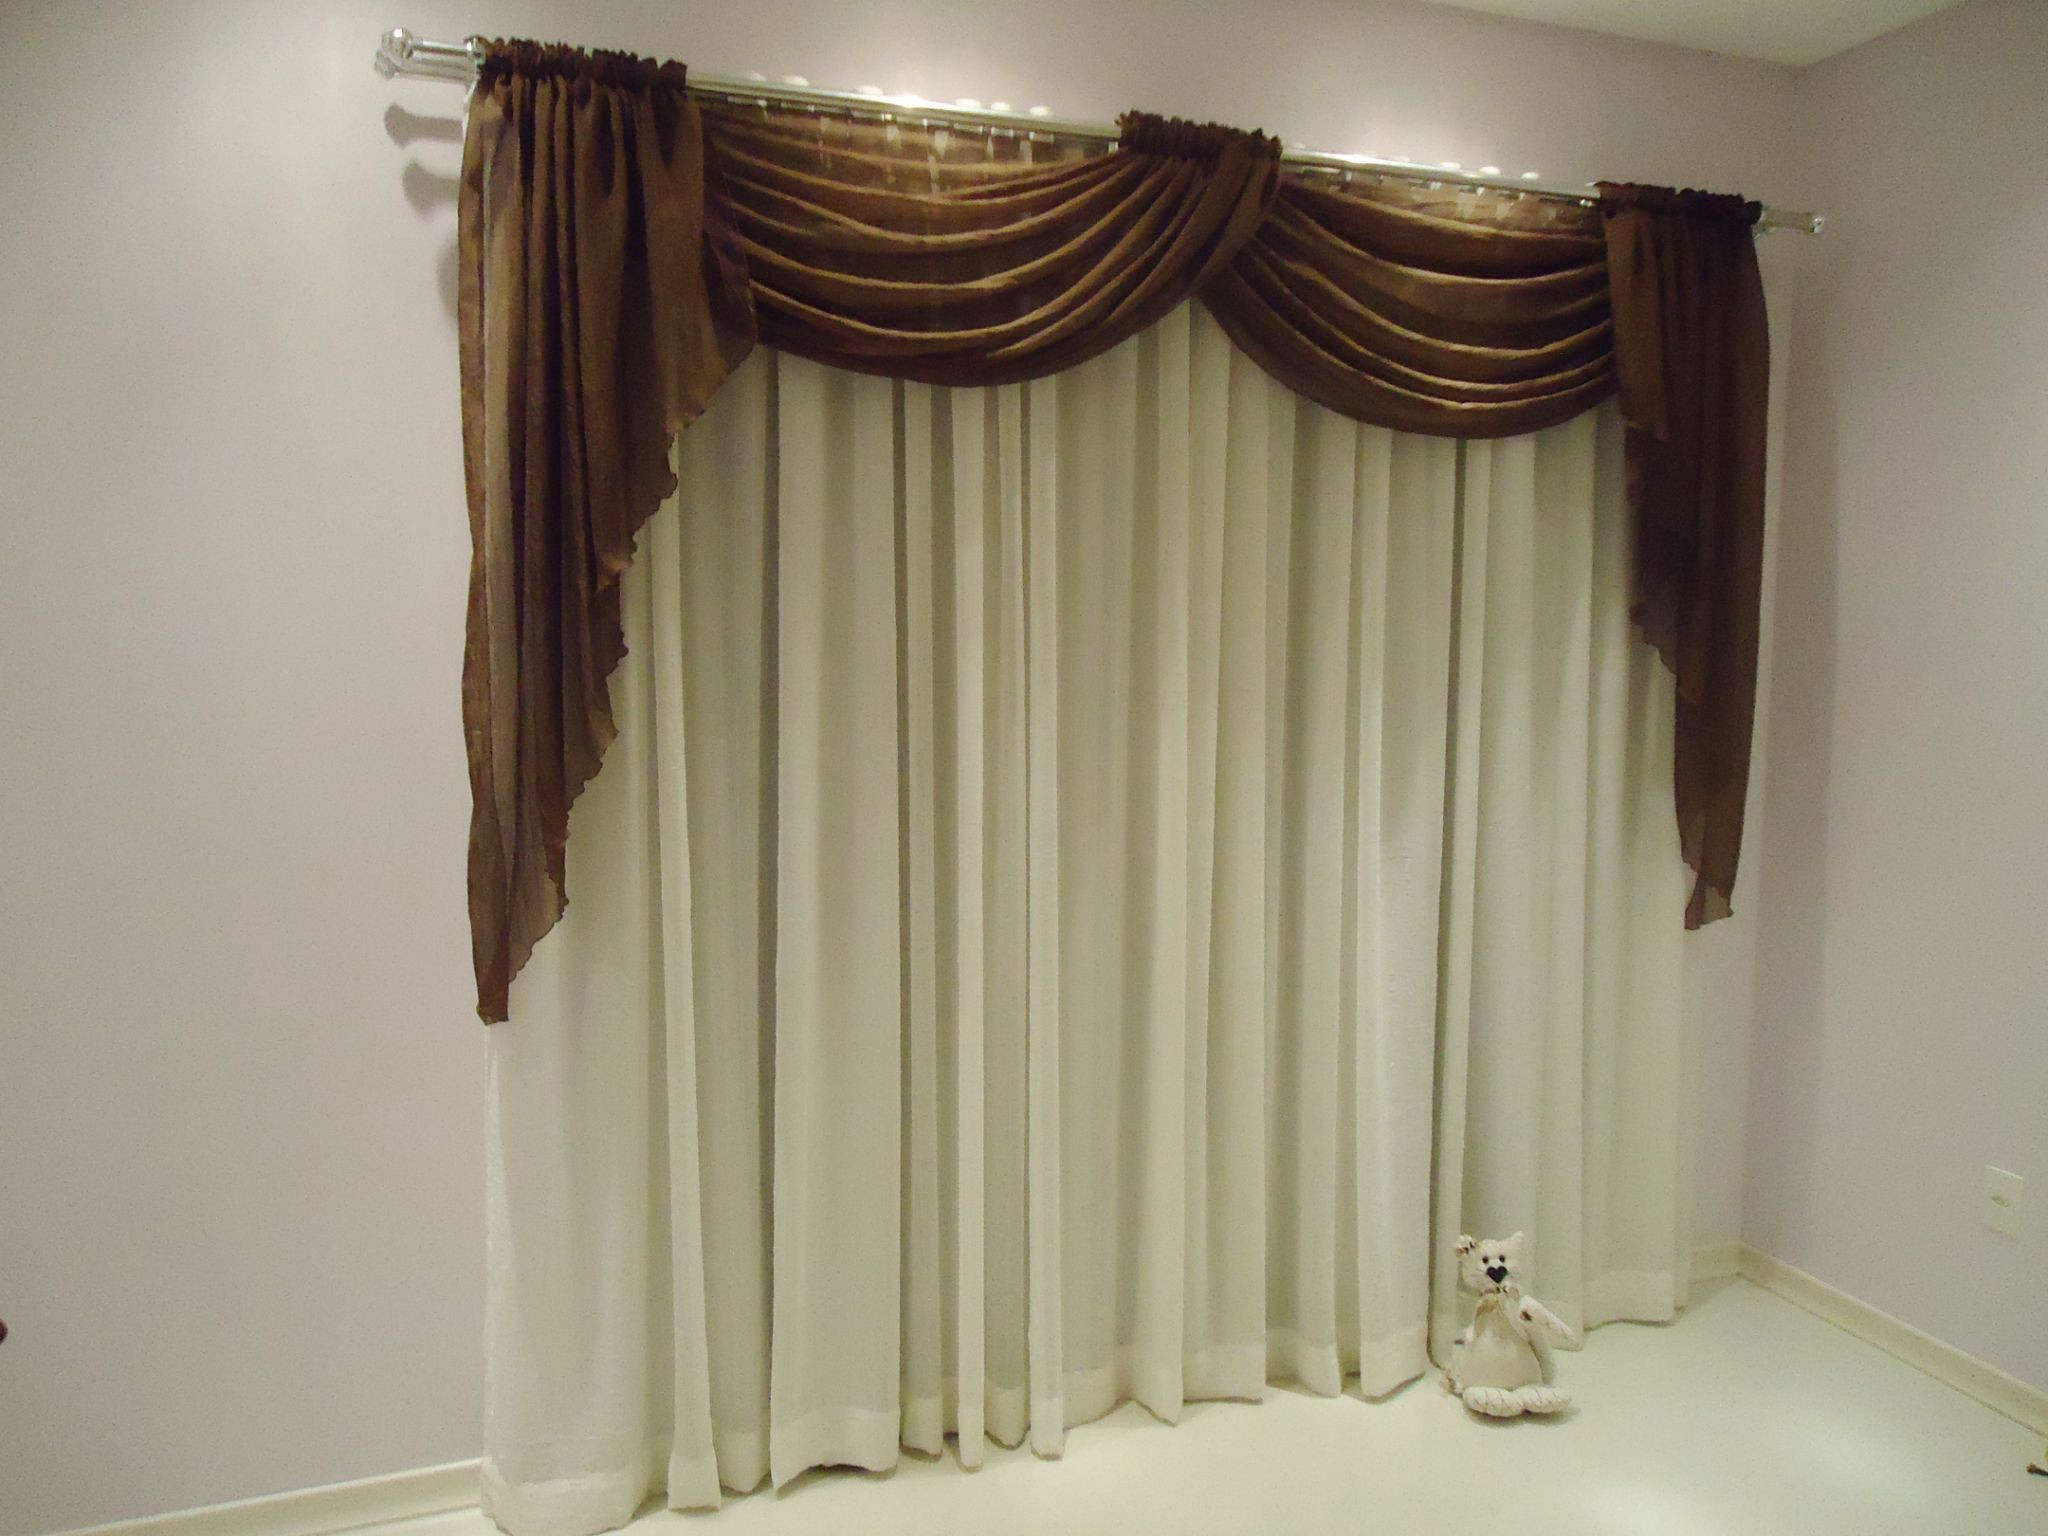 Macys Kitchen Curtains
 Curtain & Blind Beautiful Design Macys Curtains For